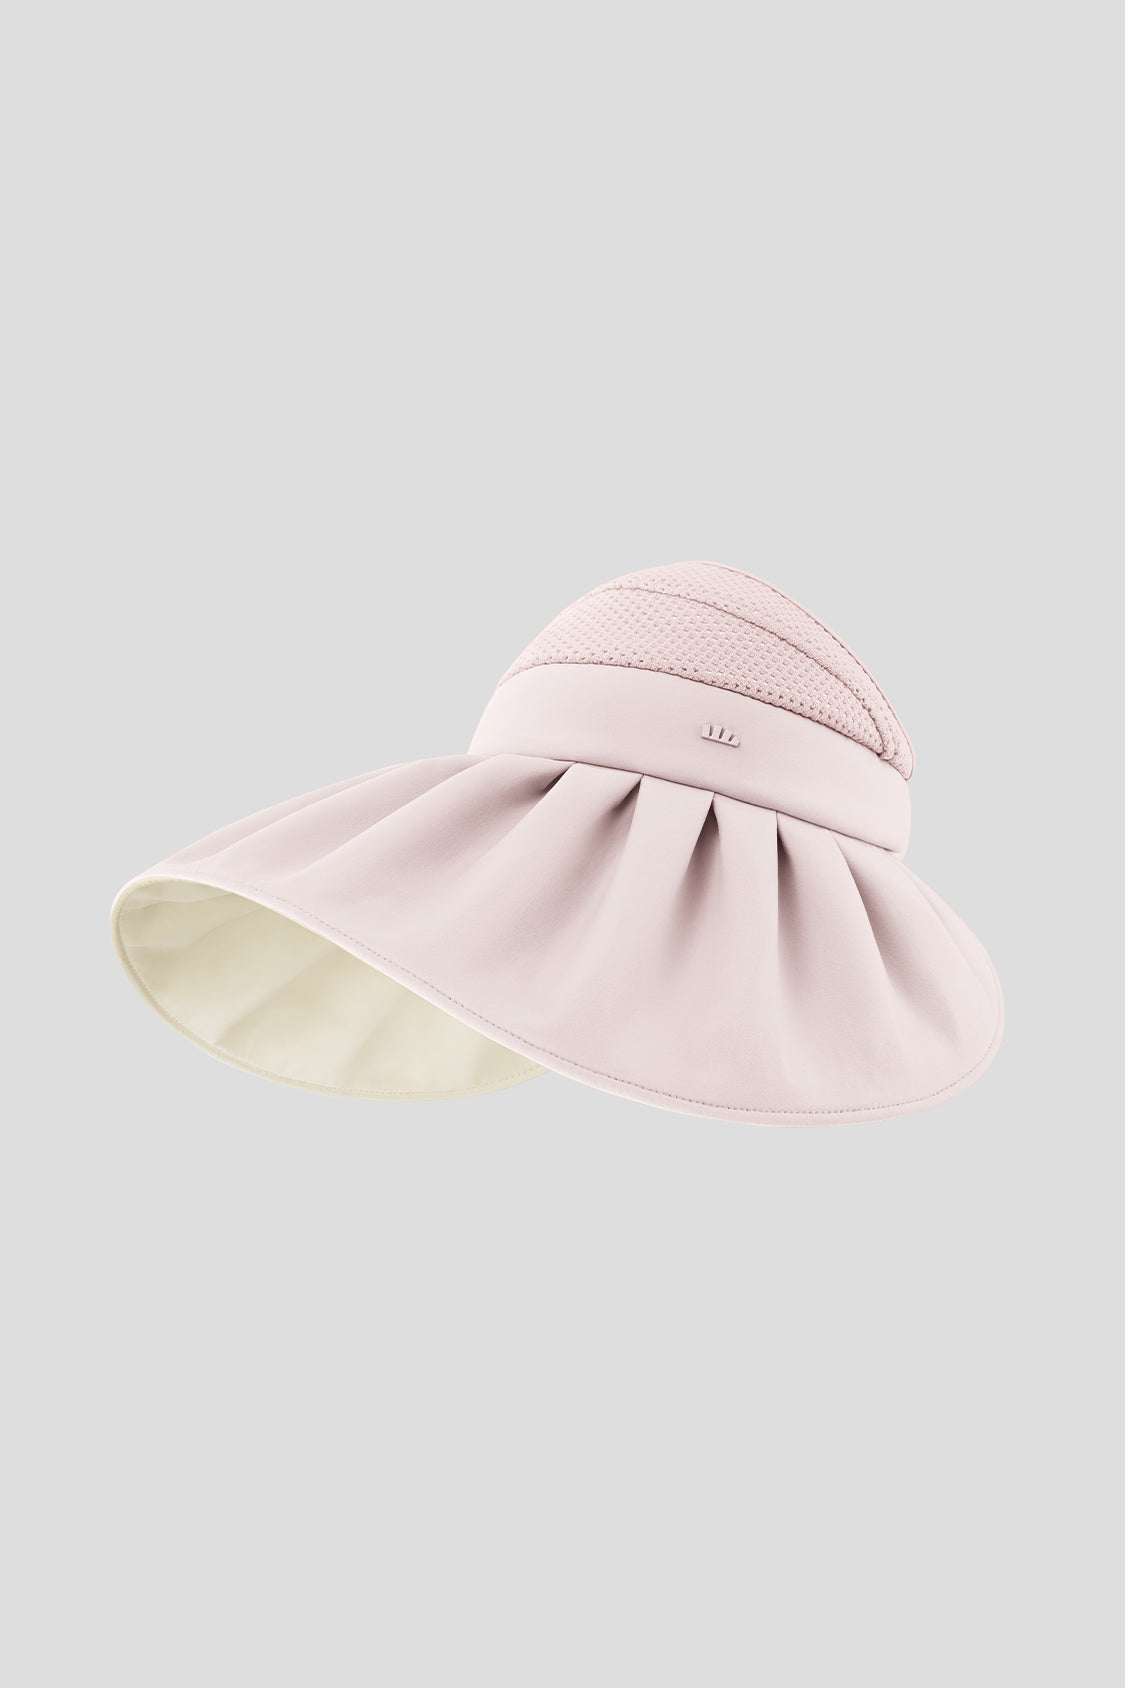 beneunder women's sun hats upf50+ #color_taro gray pink